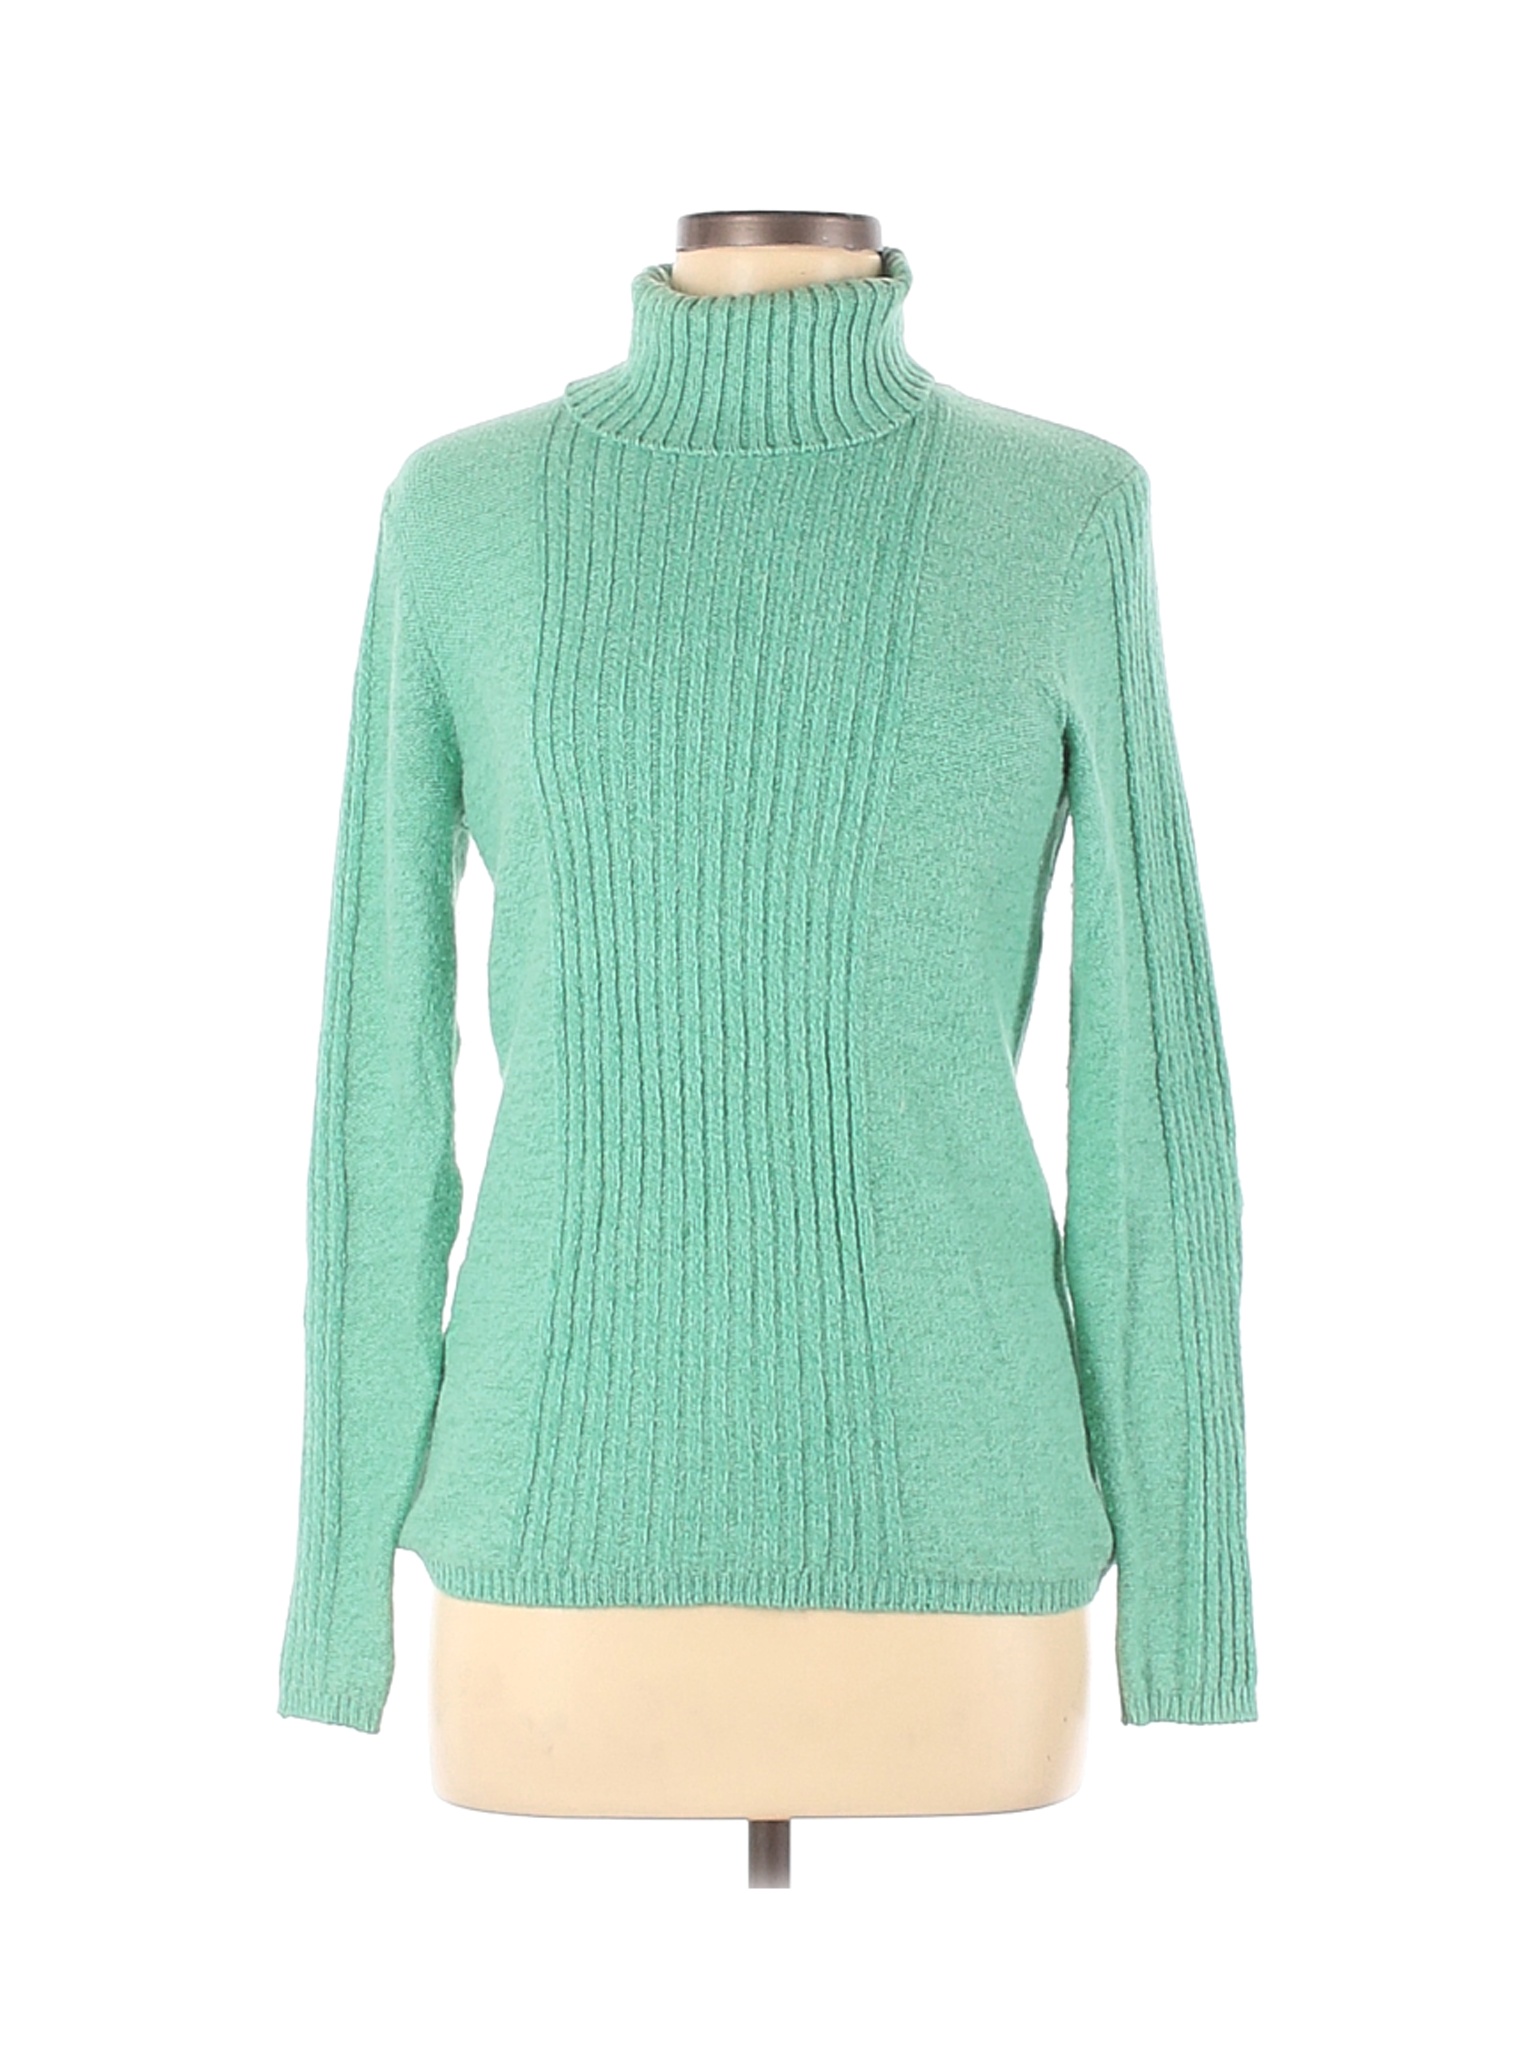 Sundance Women Green Turtleneck Sweater M | eBay